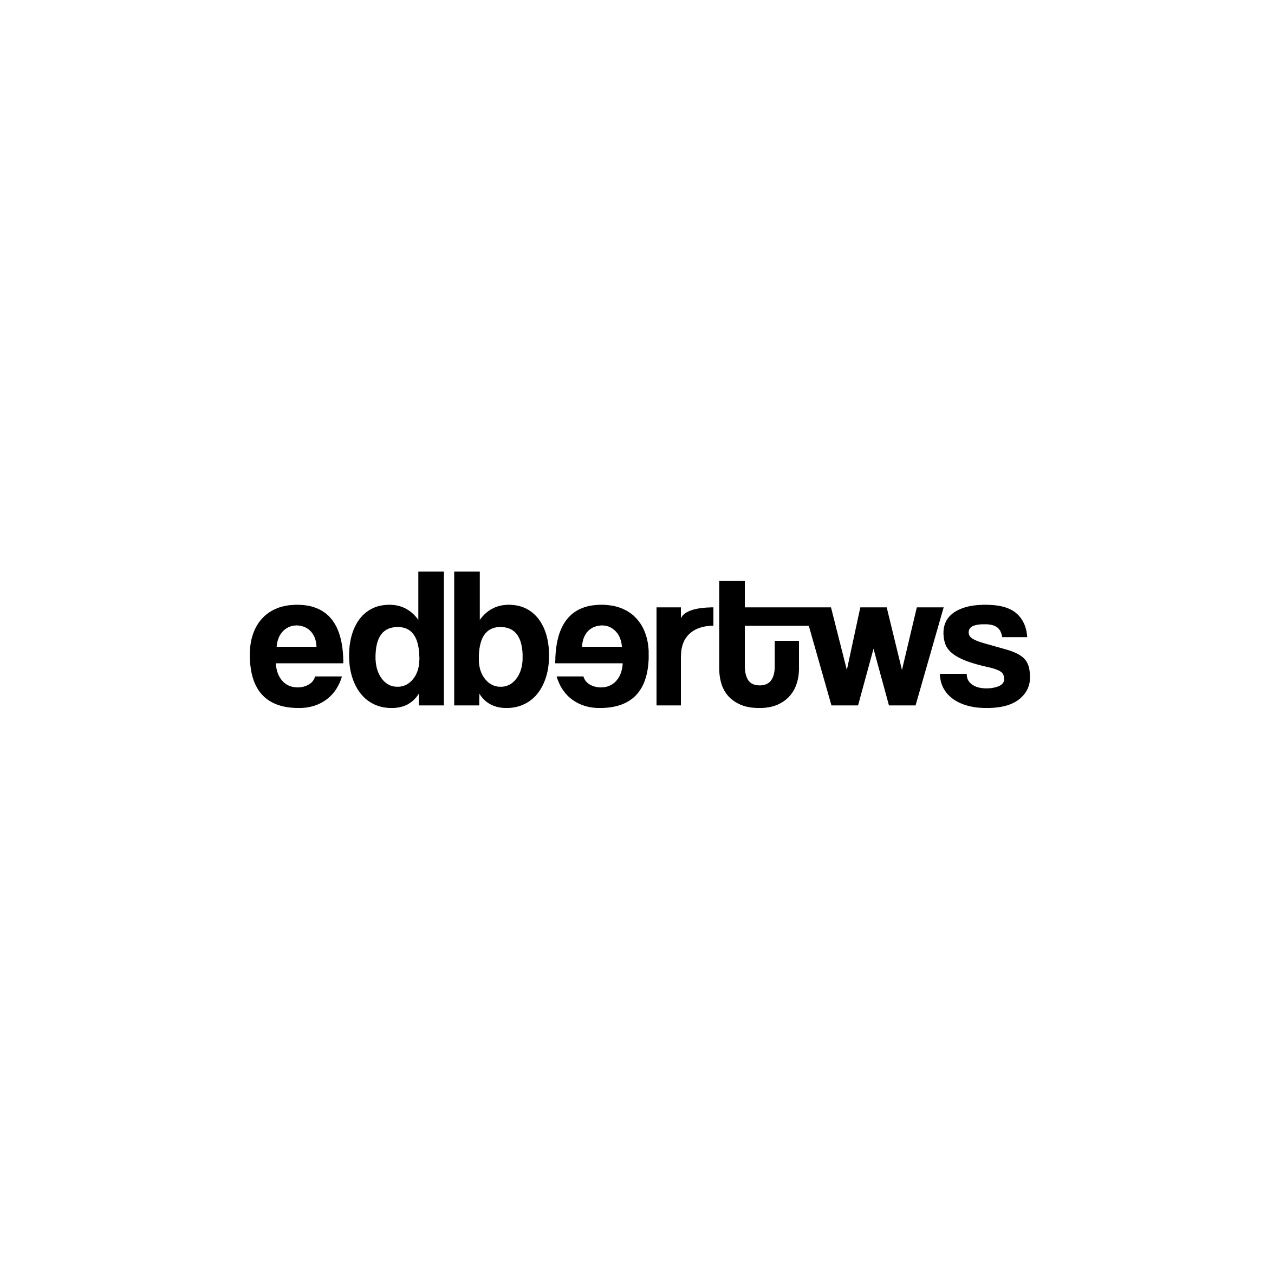 edbertws